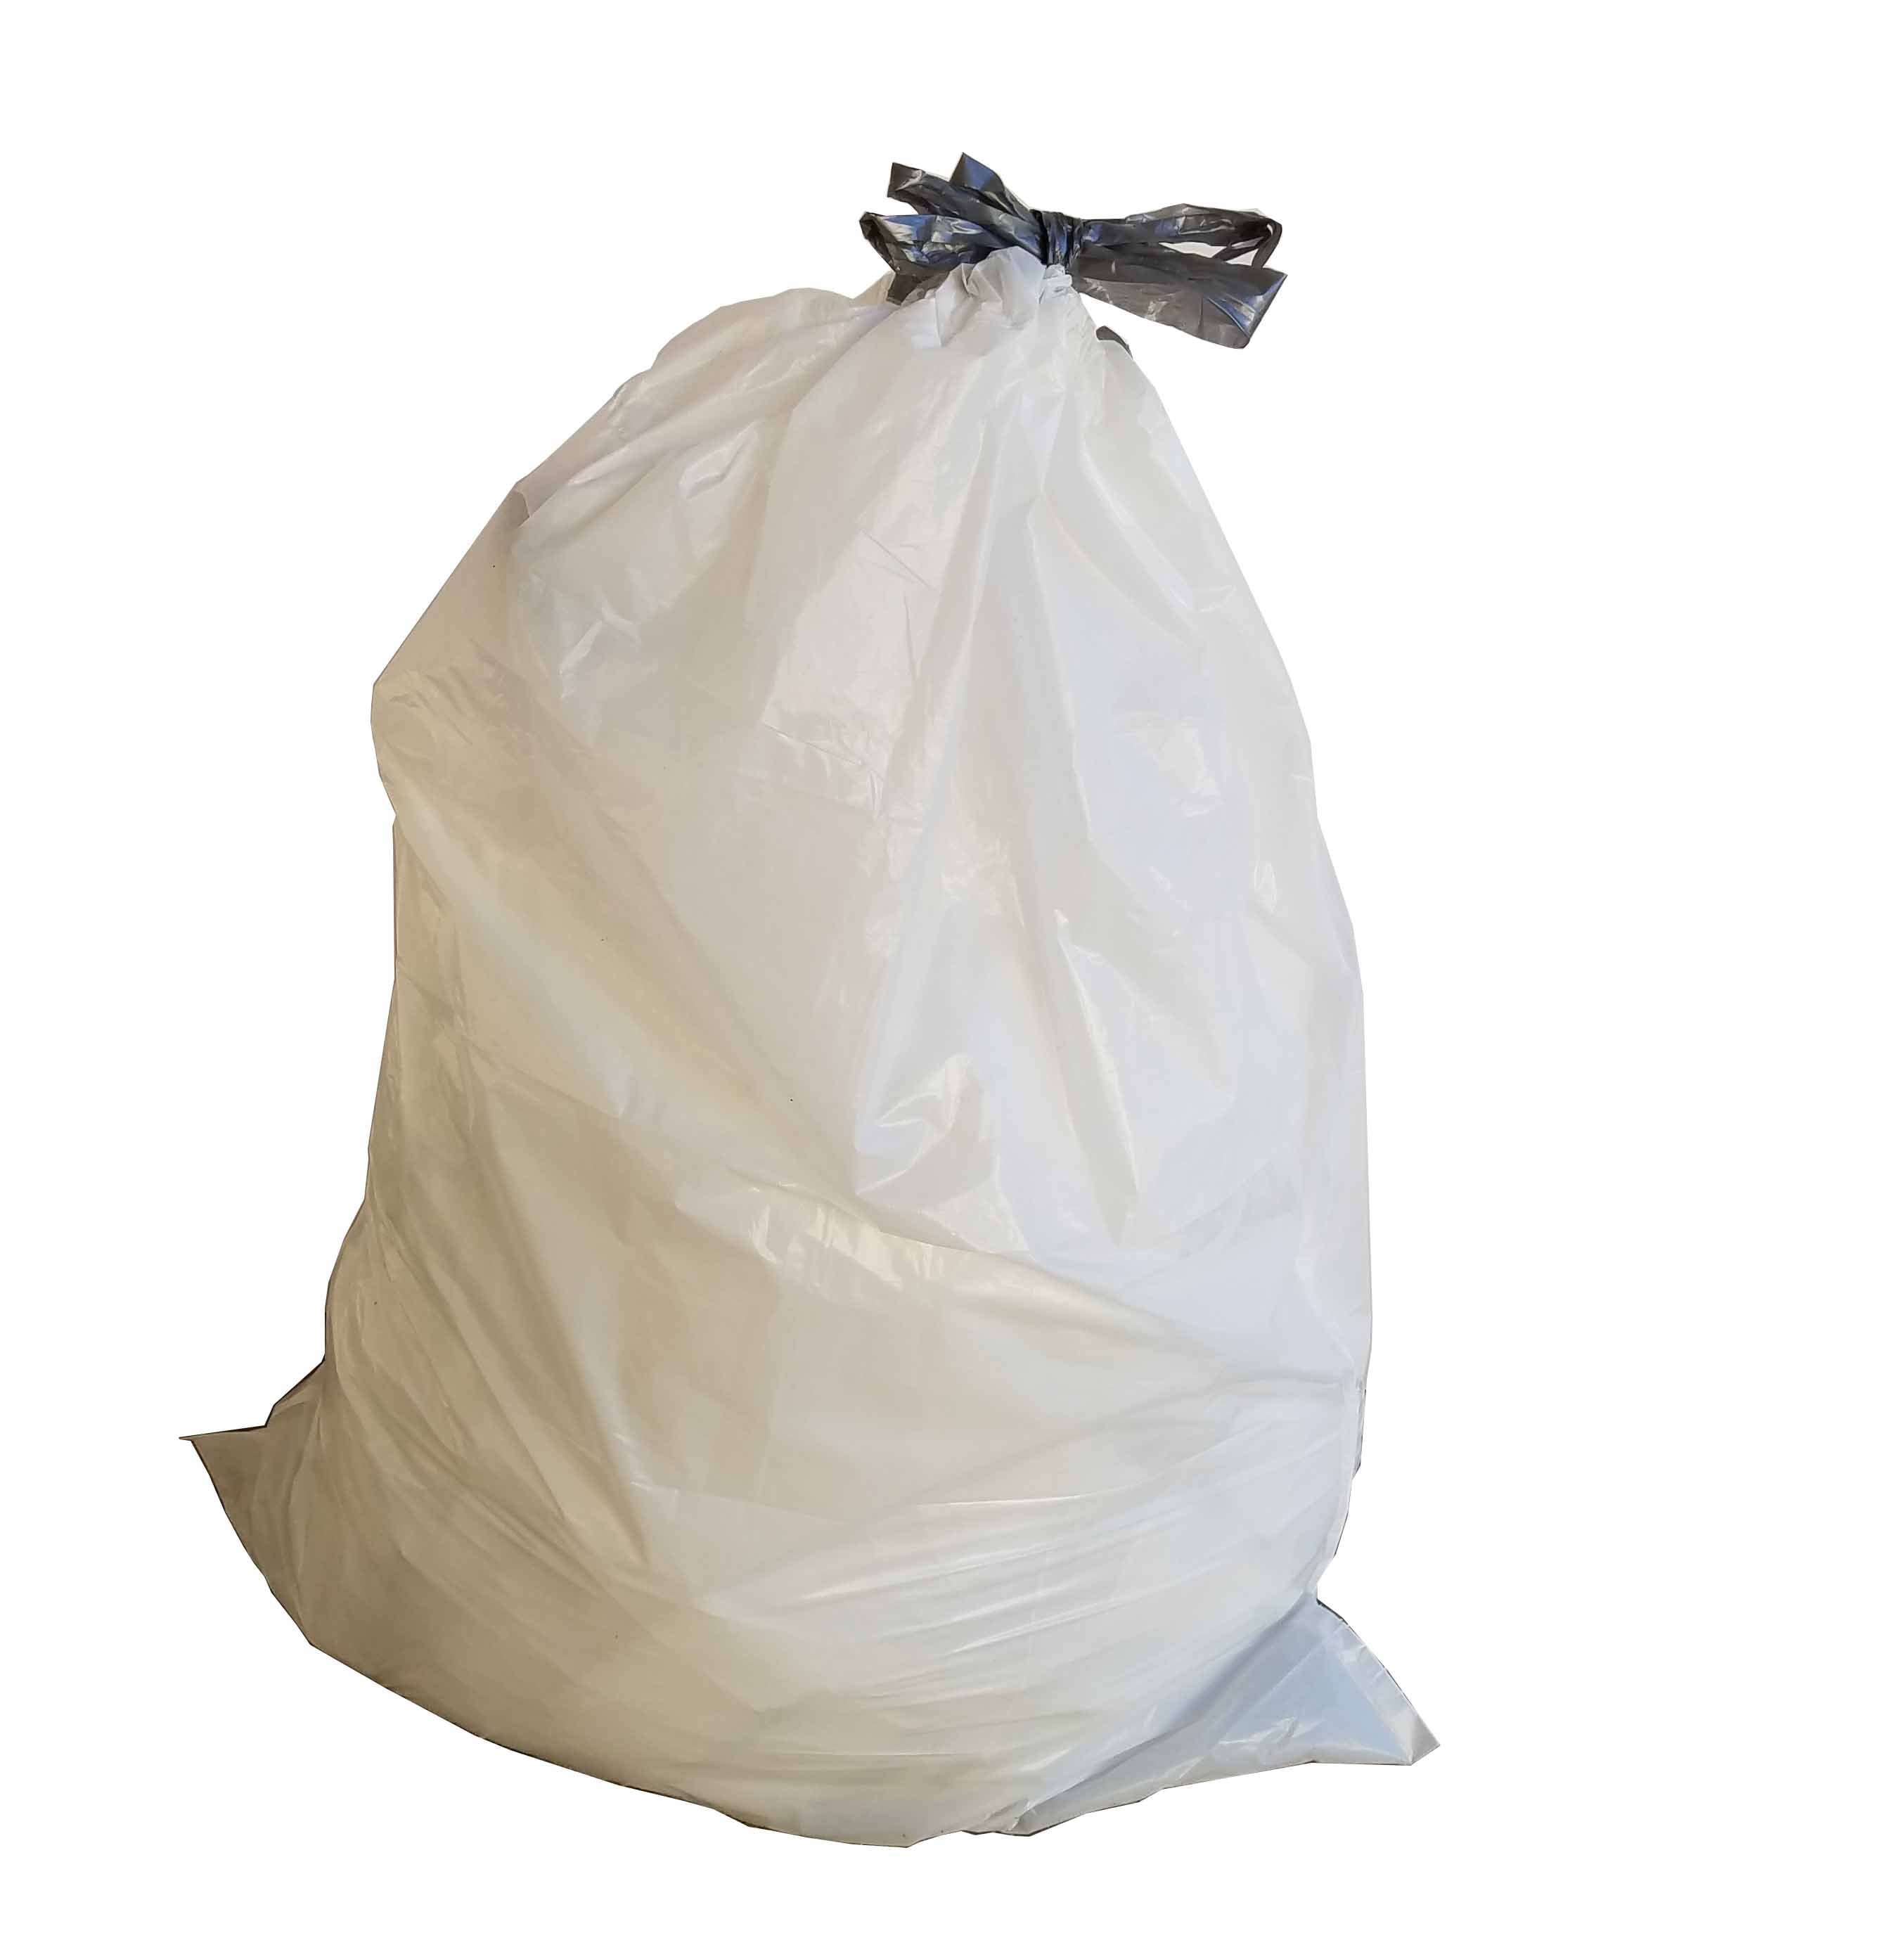 Small Trash Bags 100 Count 4 Gallon Garbage Bags Wastebasket Bin